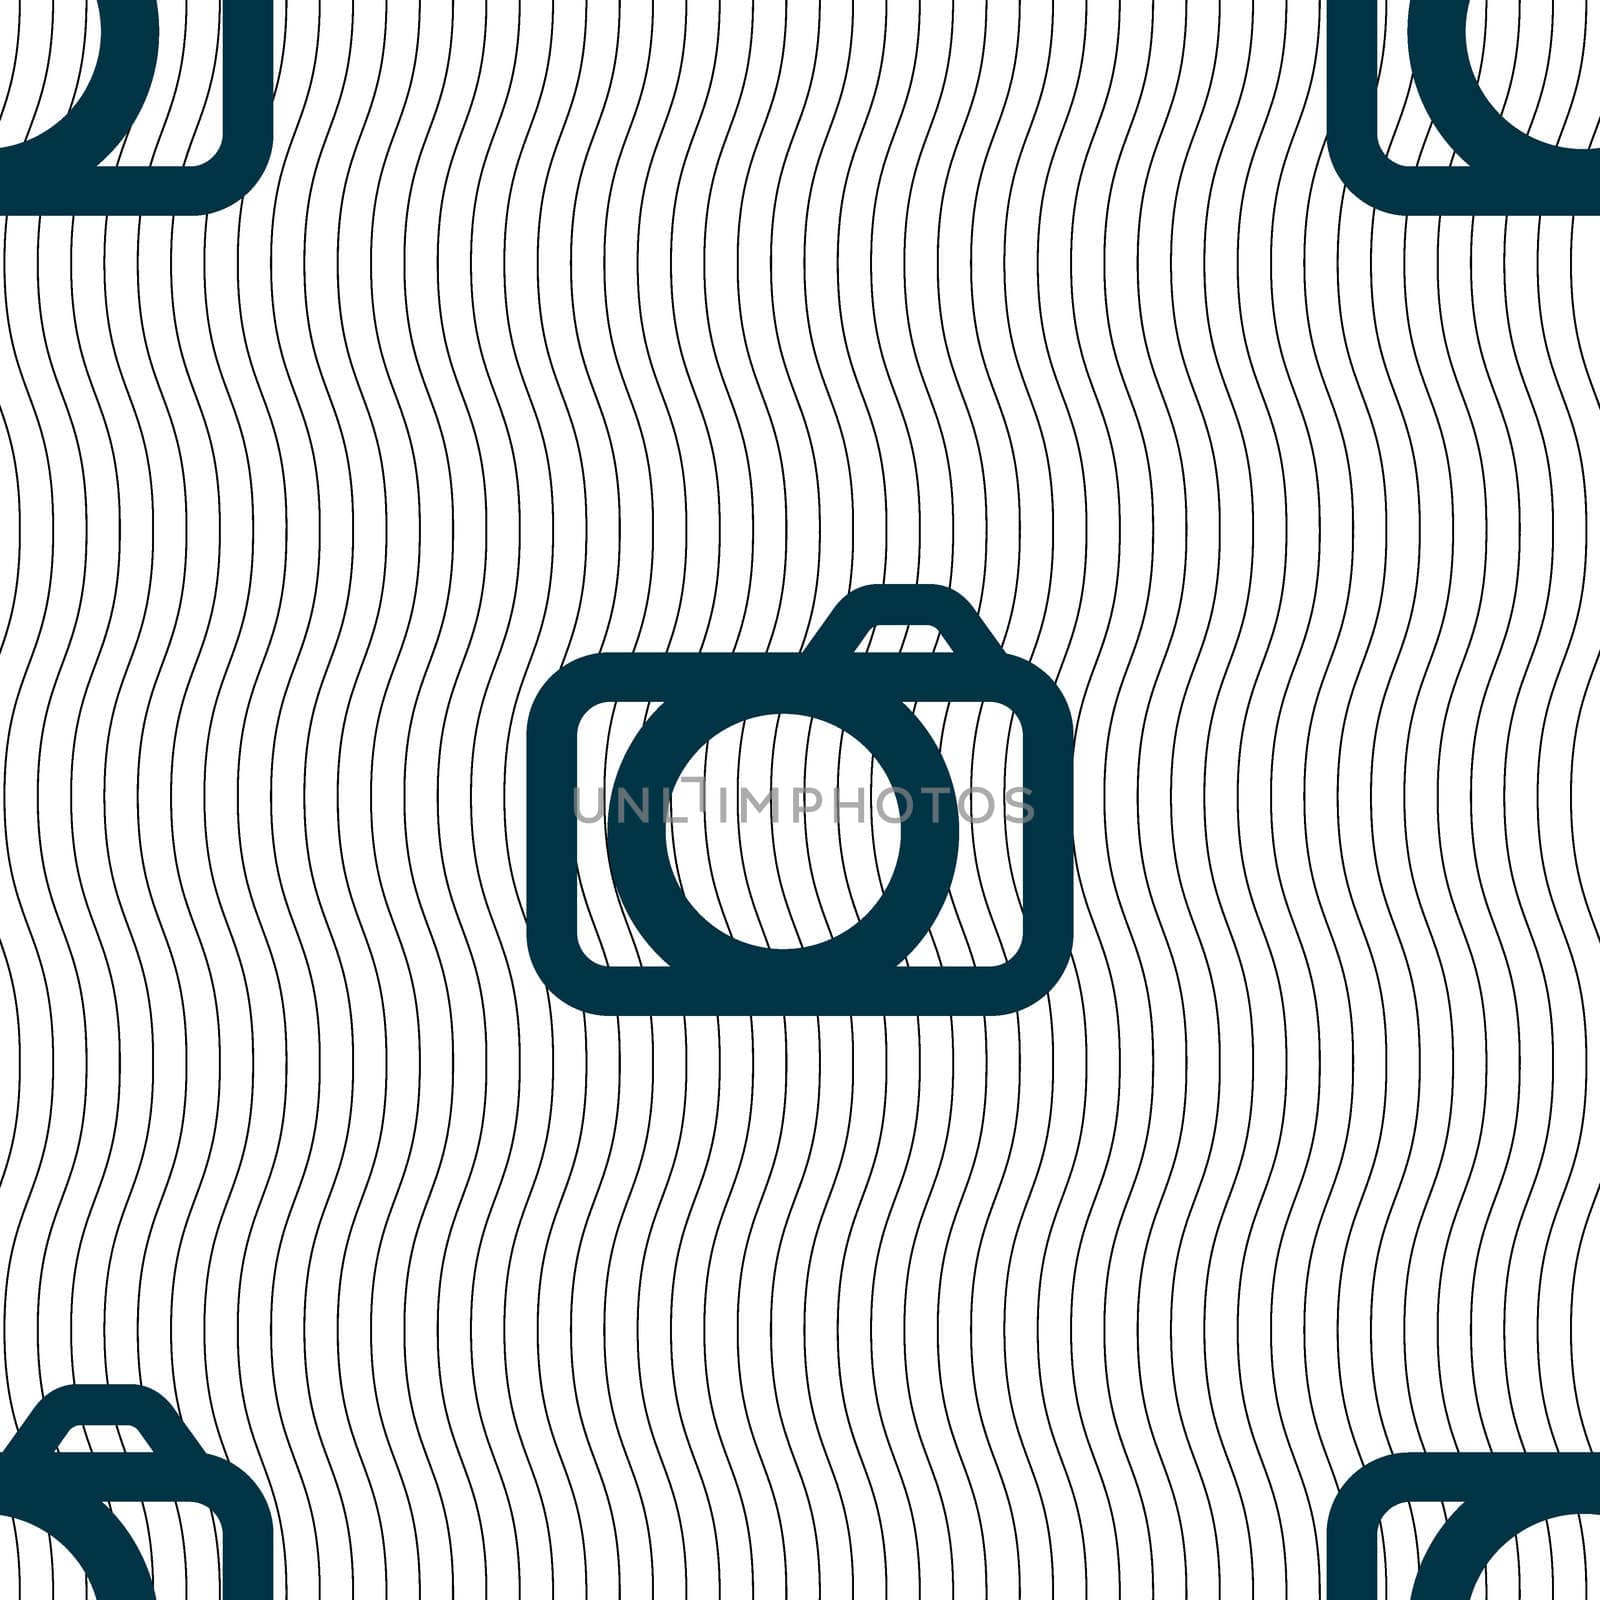 Photo camera sign icon. Digital photo camera symbol. Seamless pattern with geometric texture. illustration